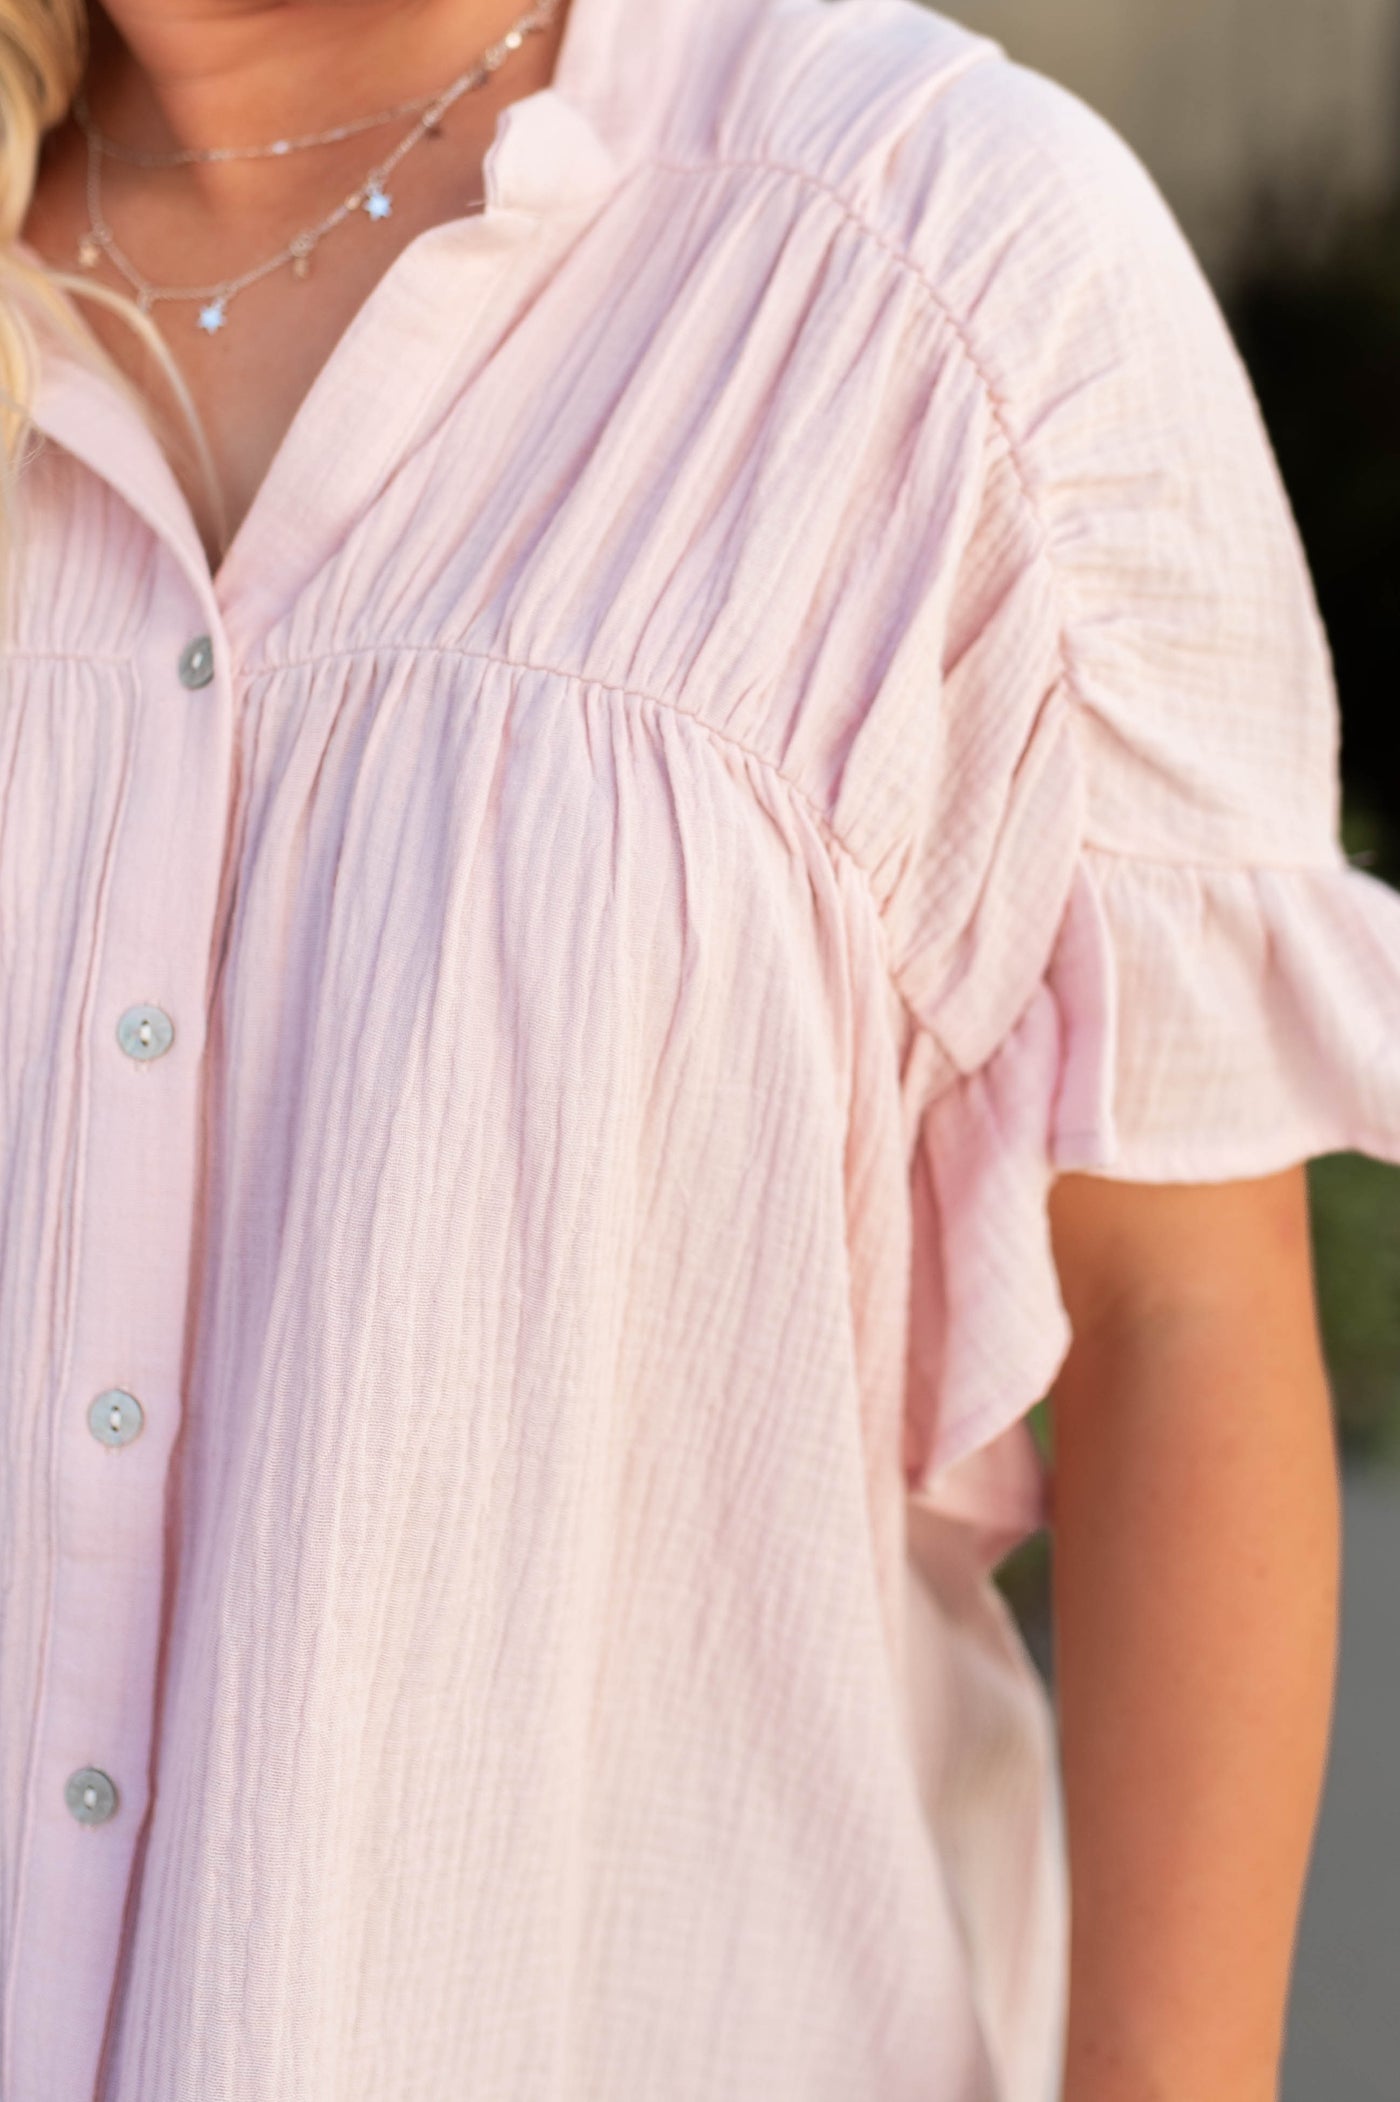 Sleeve of a short sleeve blush top